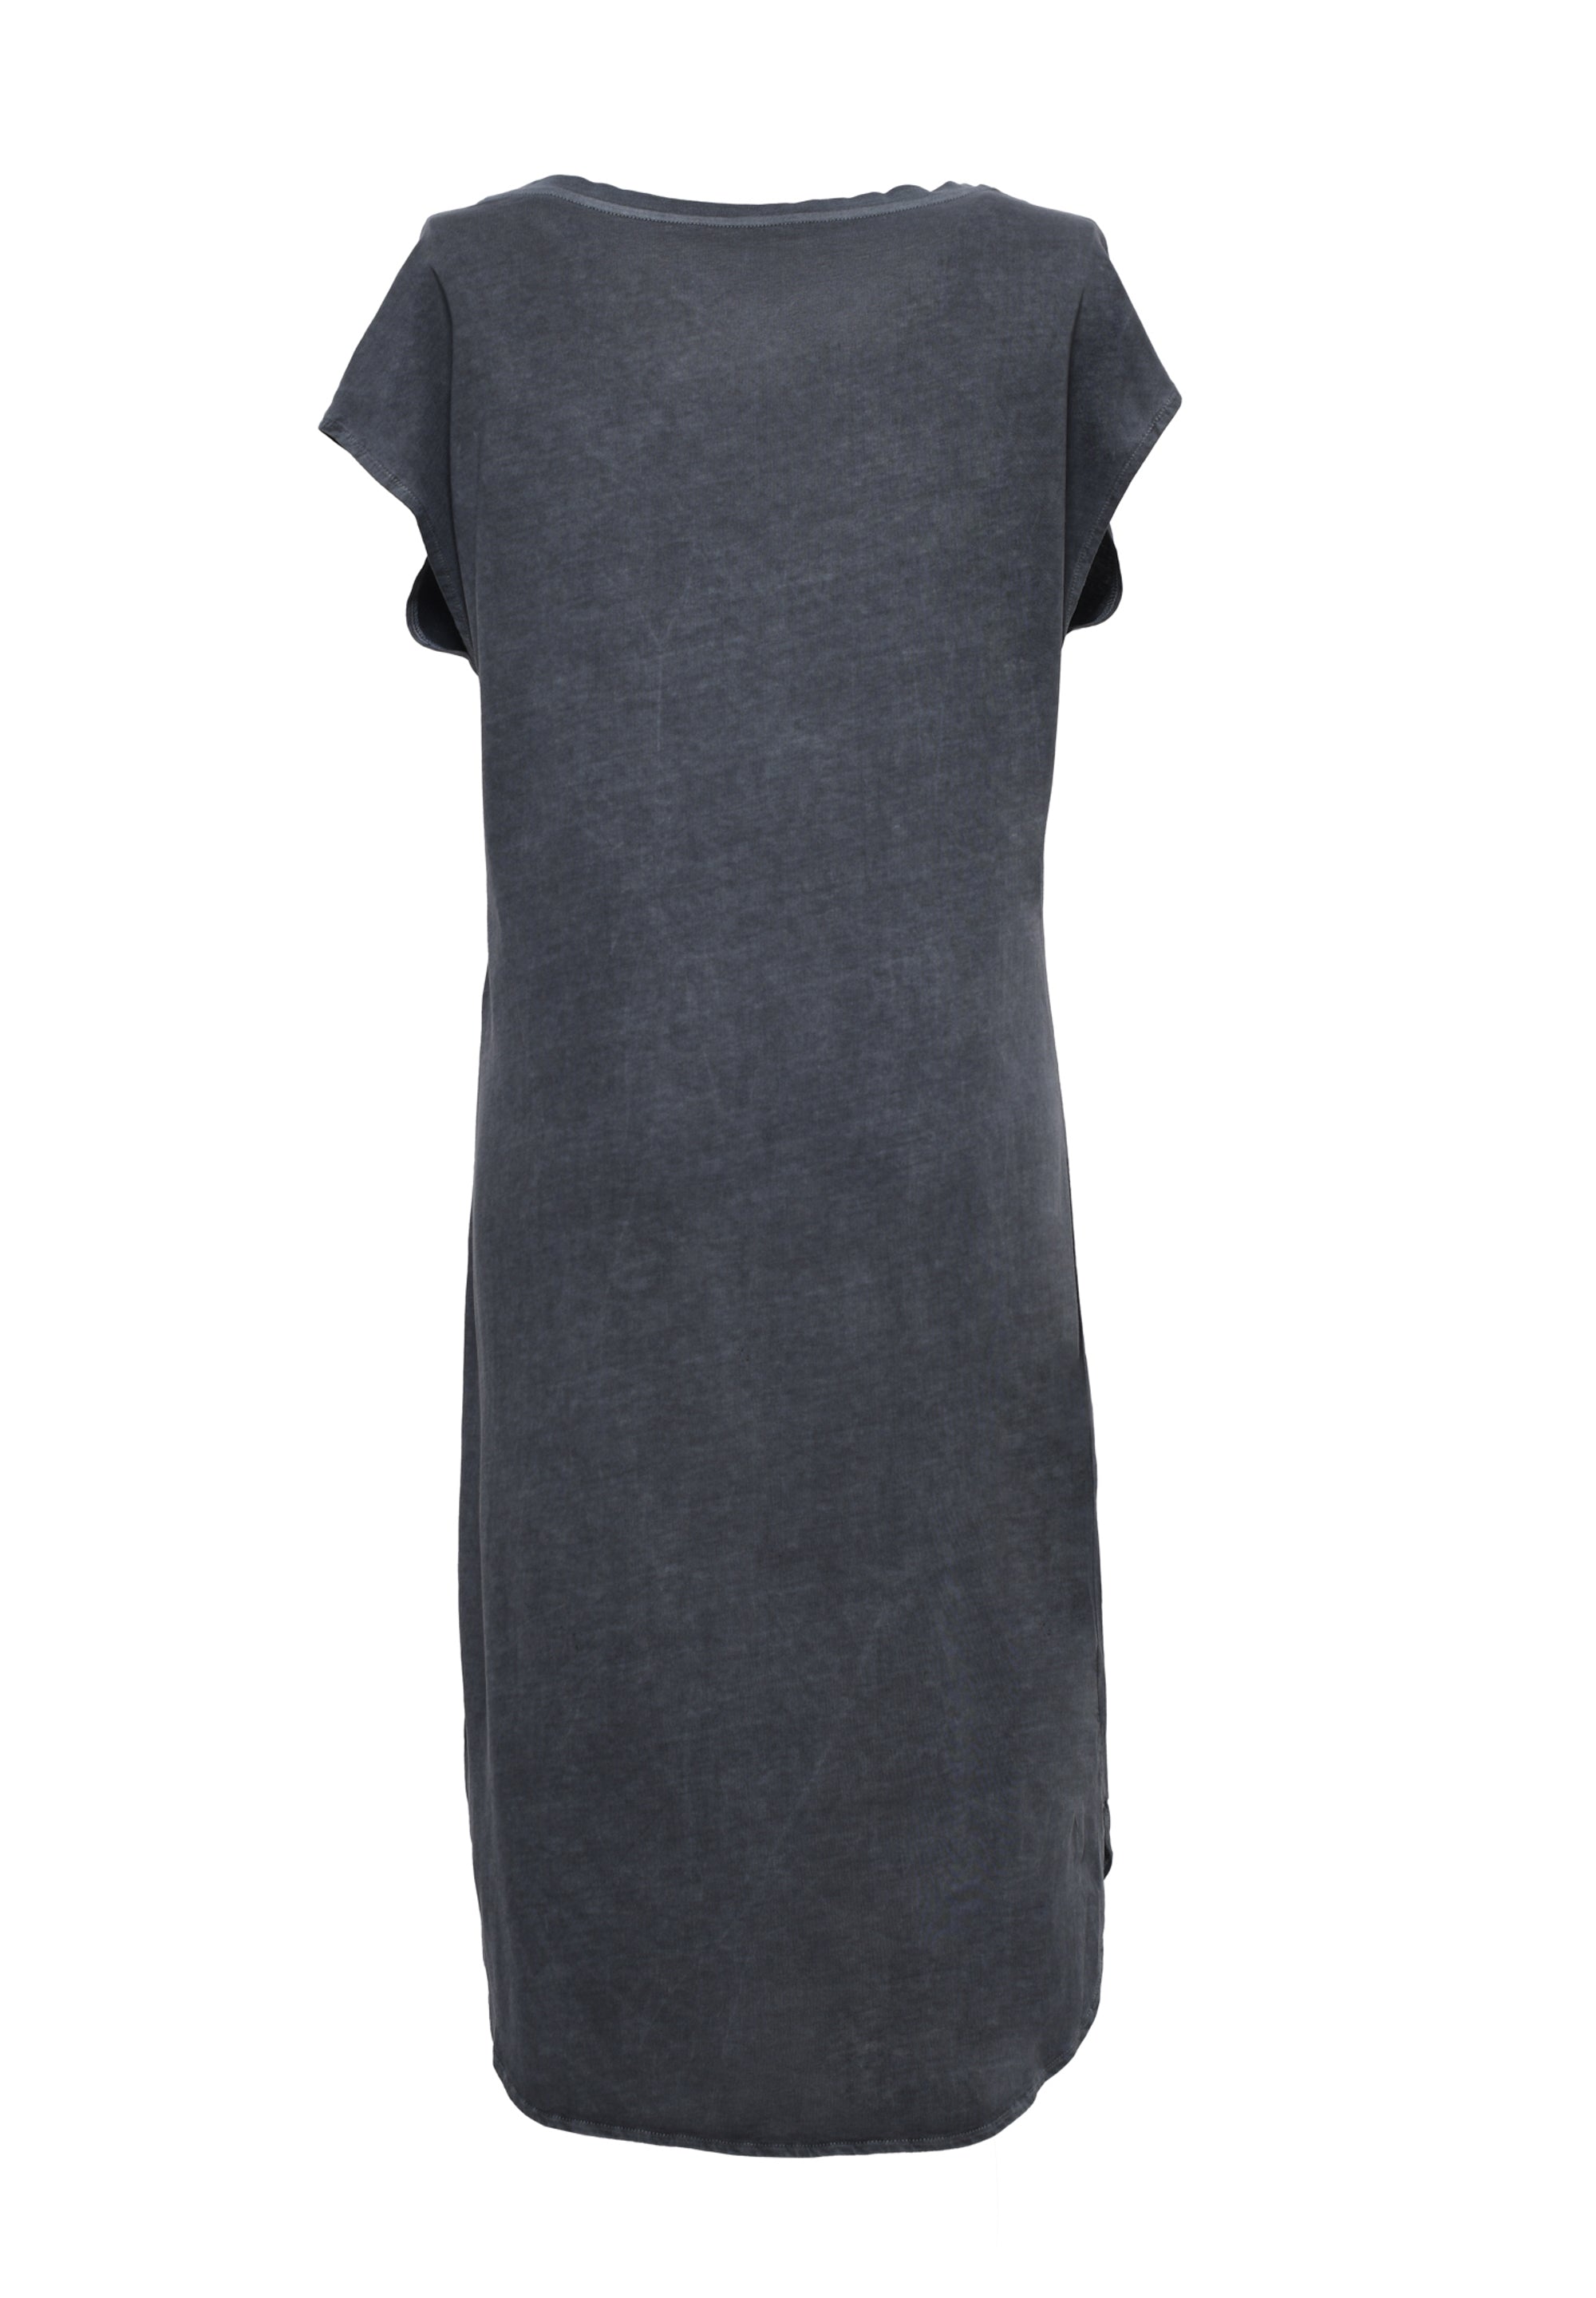 SOMWR ULTRA Dress GRY013